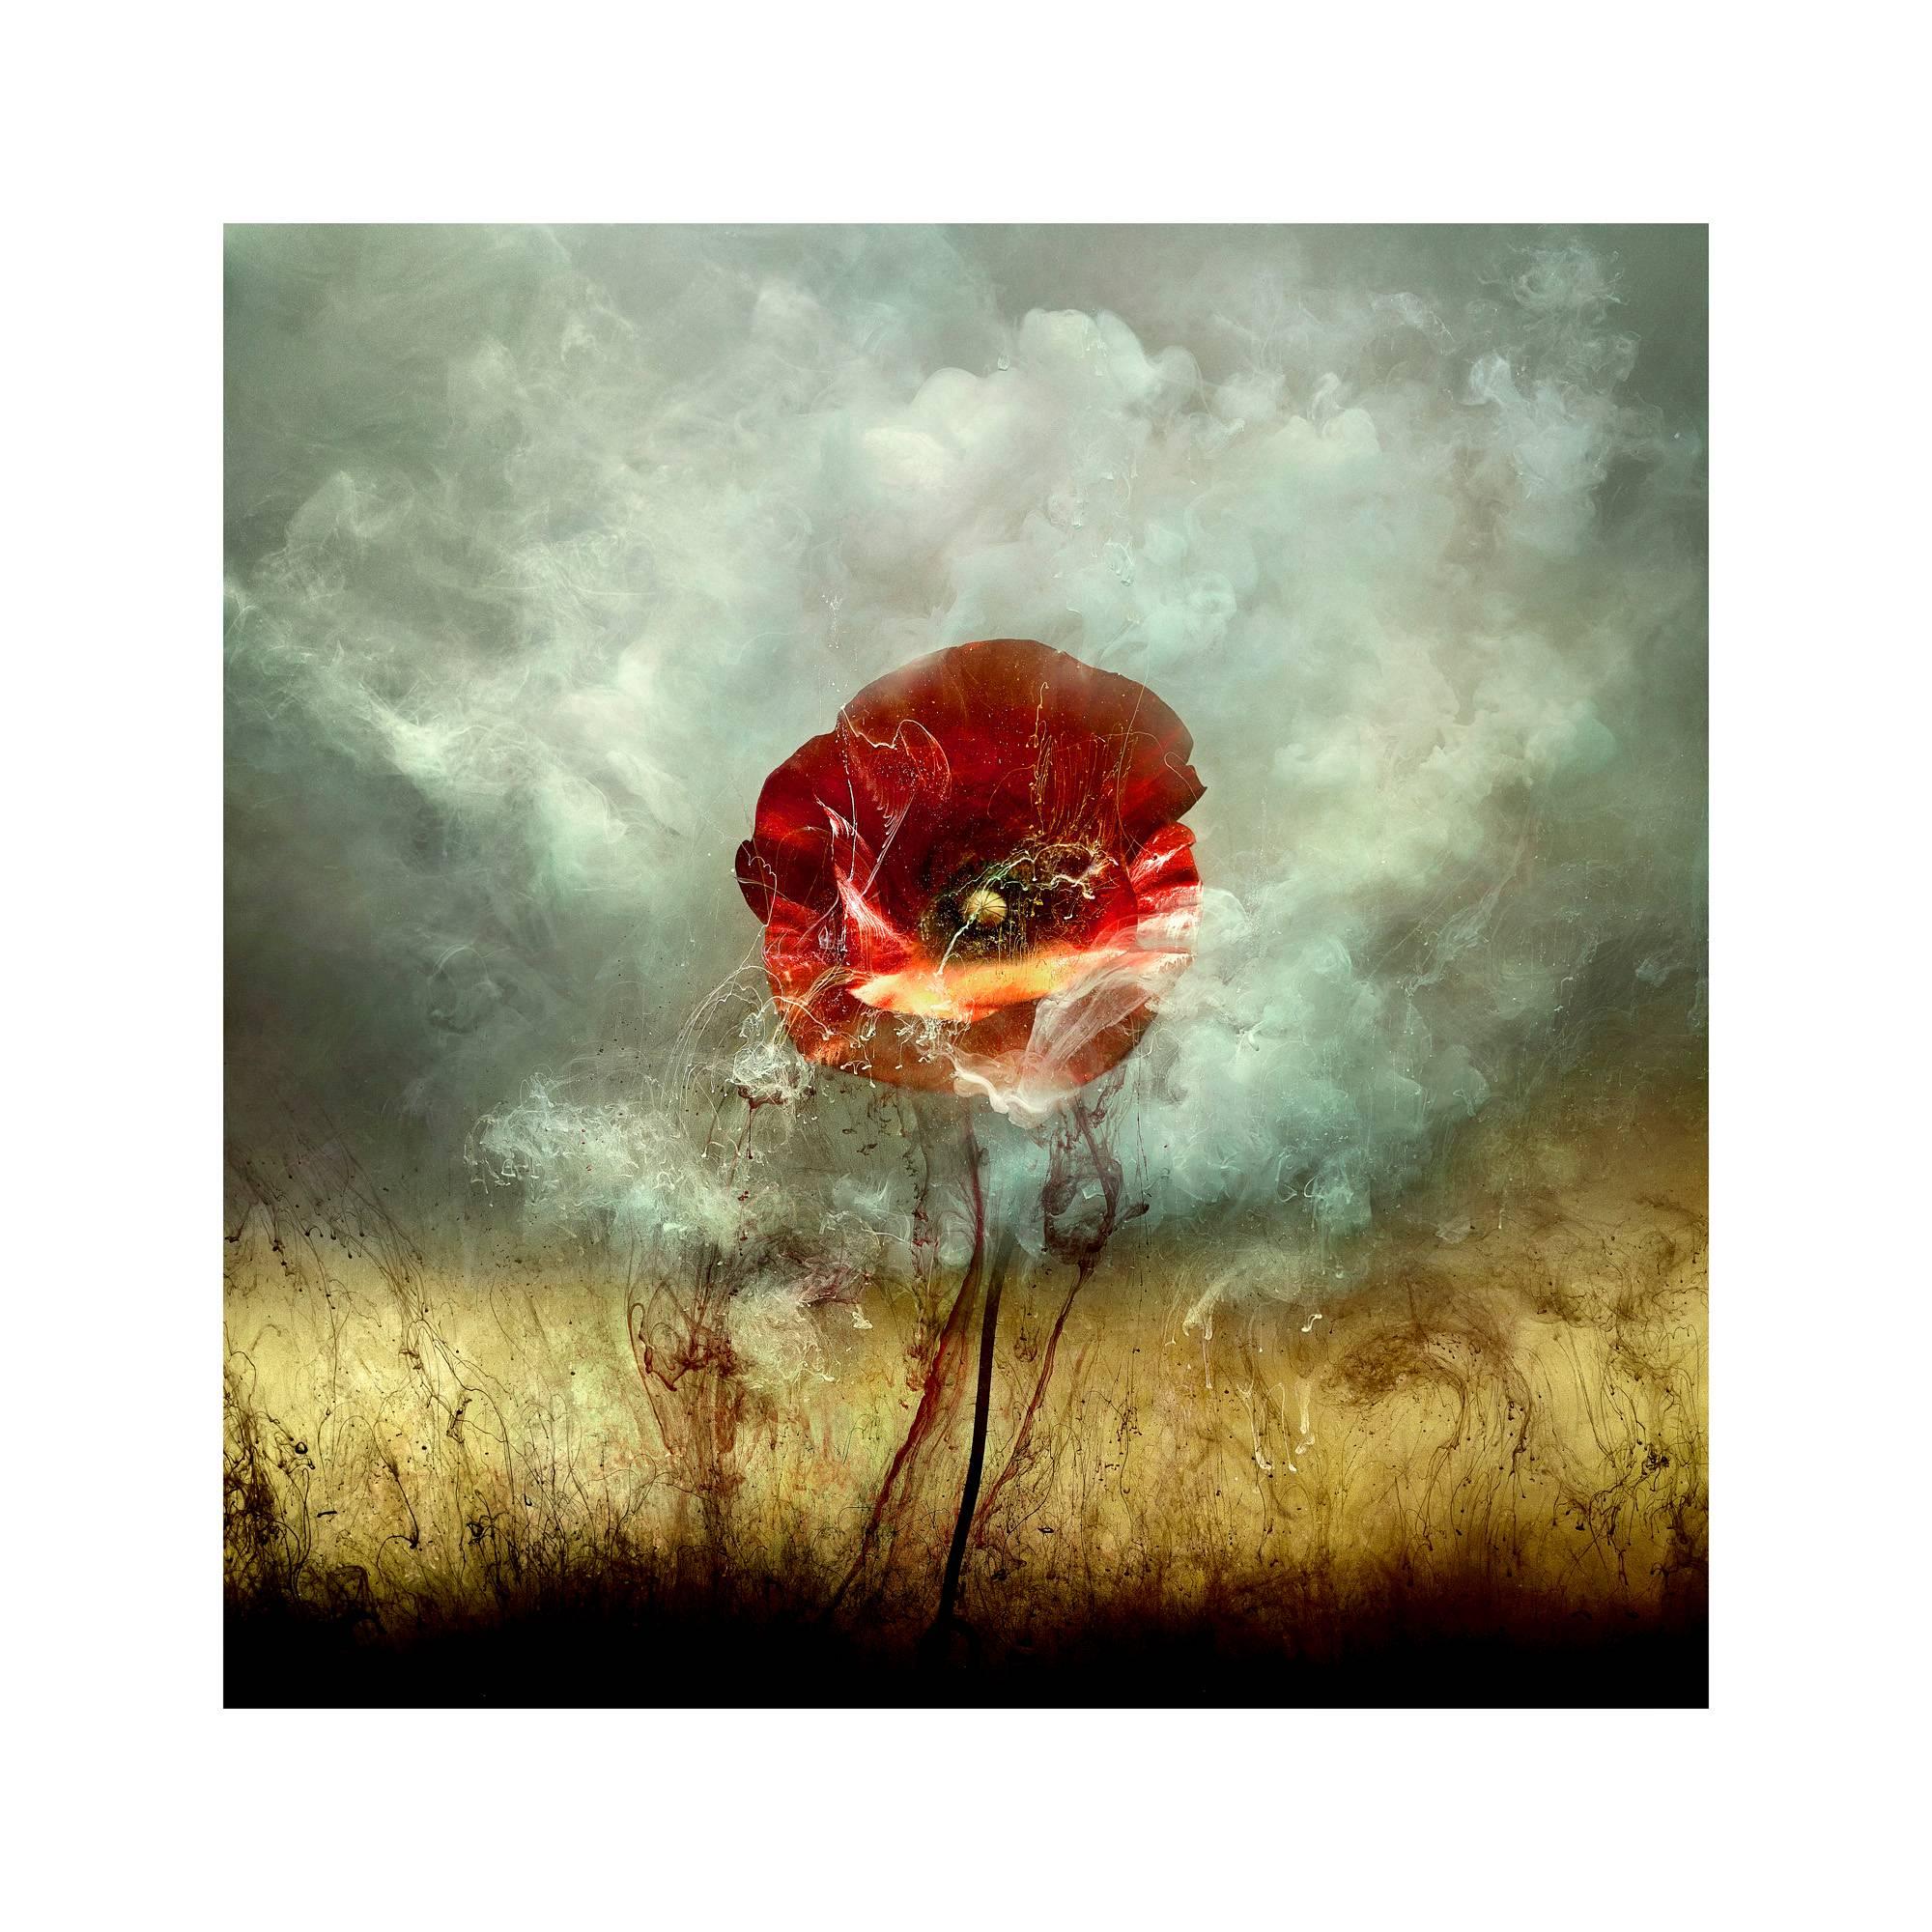 Giles Revell Color Photograph - "War Poppy 1, " 2015 Contemporary Photograph